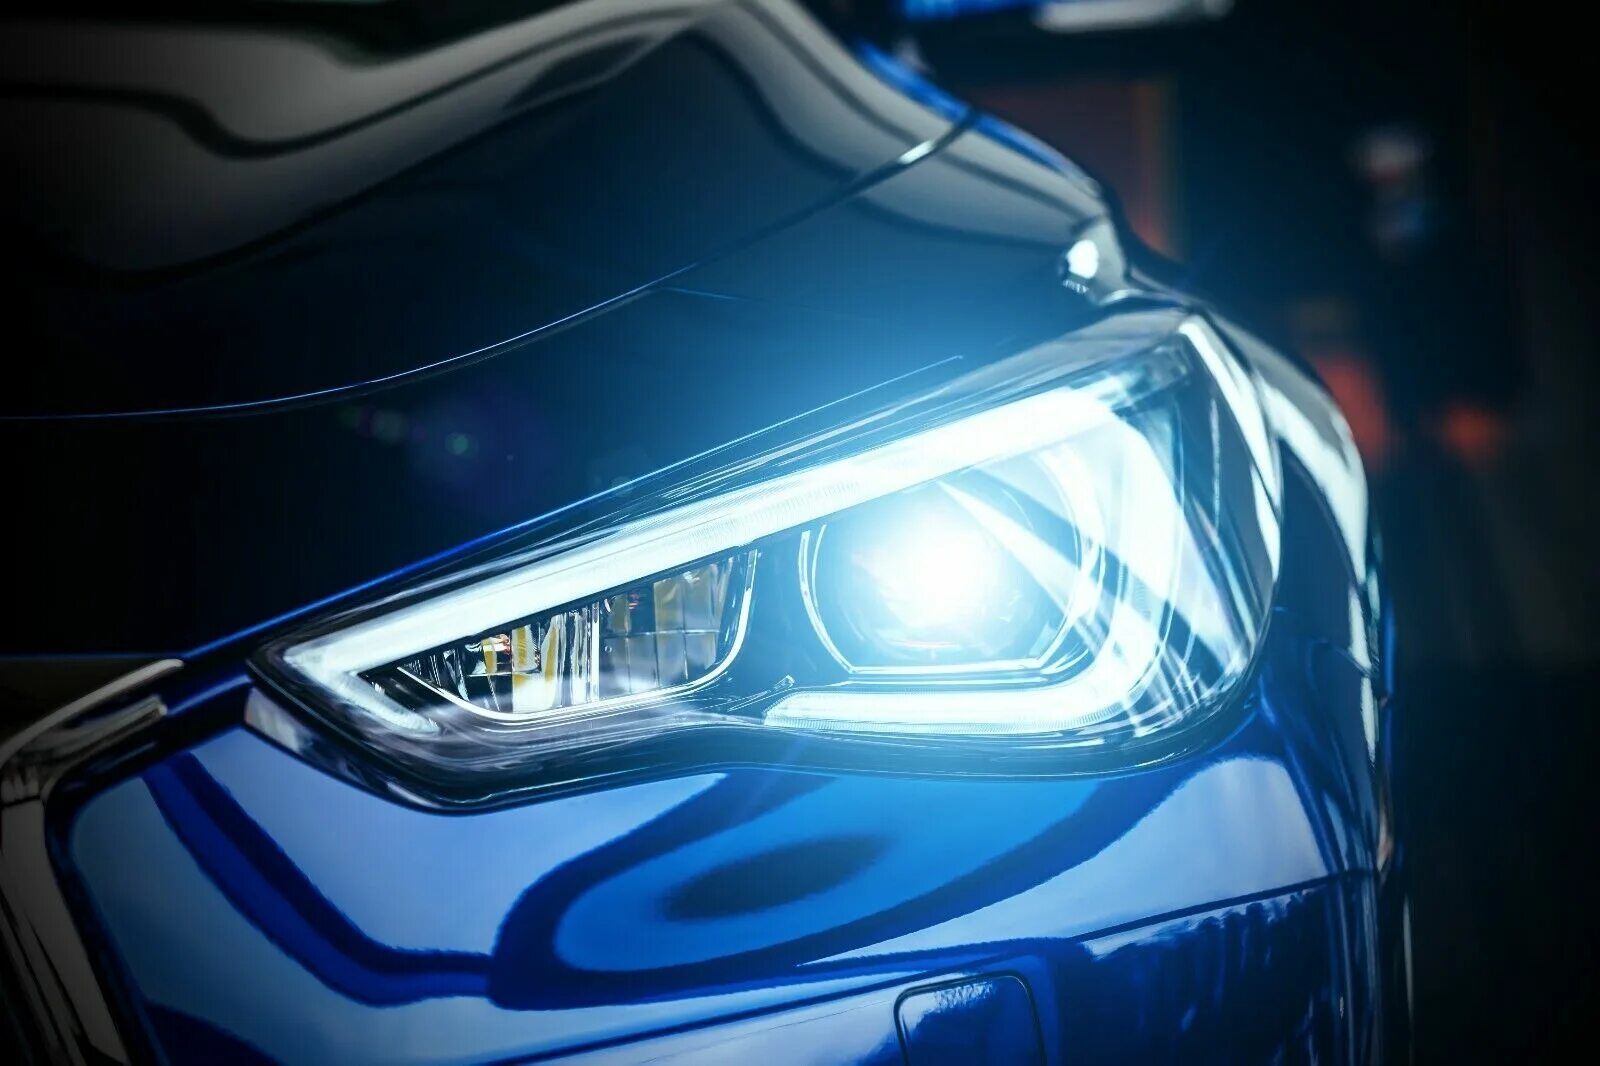 Light avto. Ксеноновые лампы BMW Blue. Car led Headlight. Фары БМВ ф30 led \ Xenon. Автосвет: ксенон-led фон.